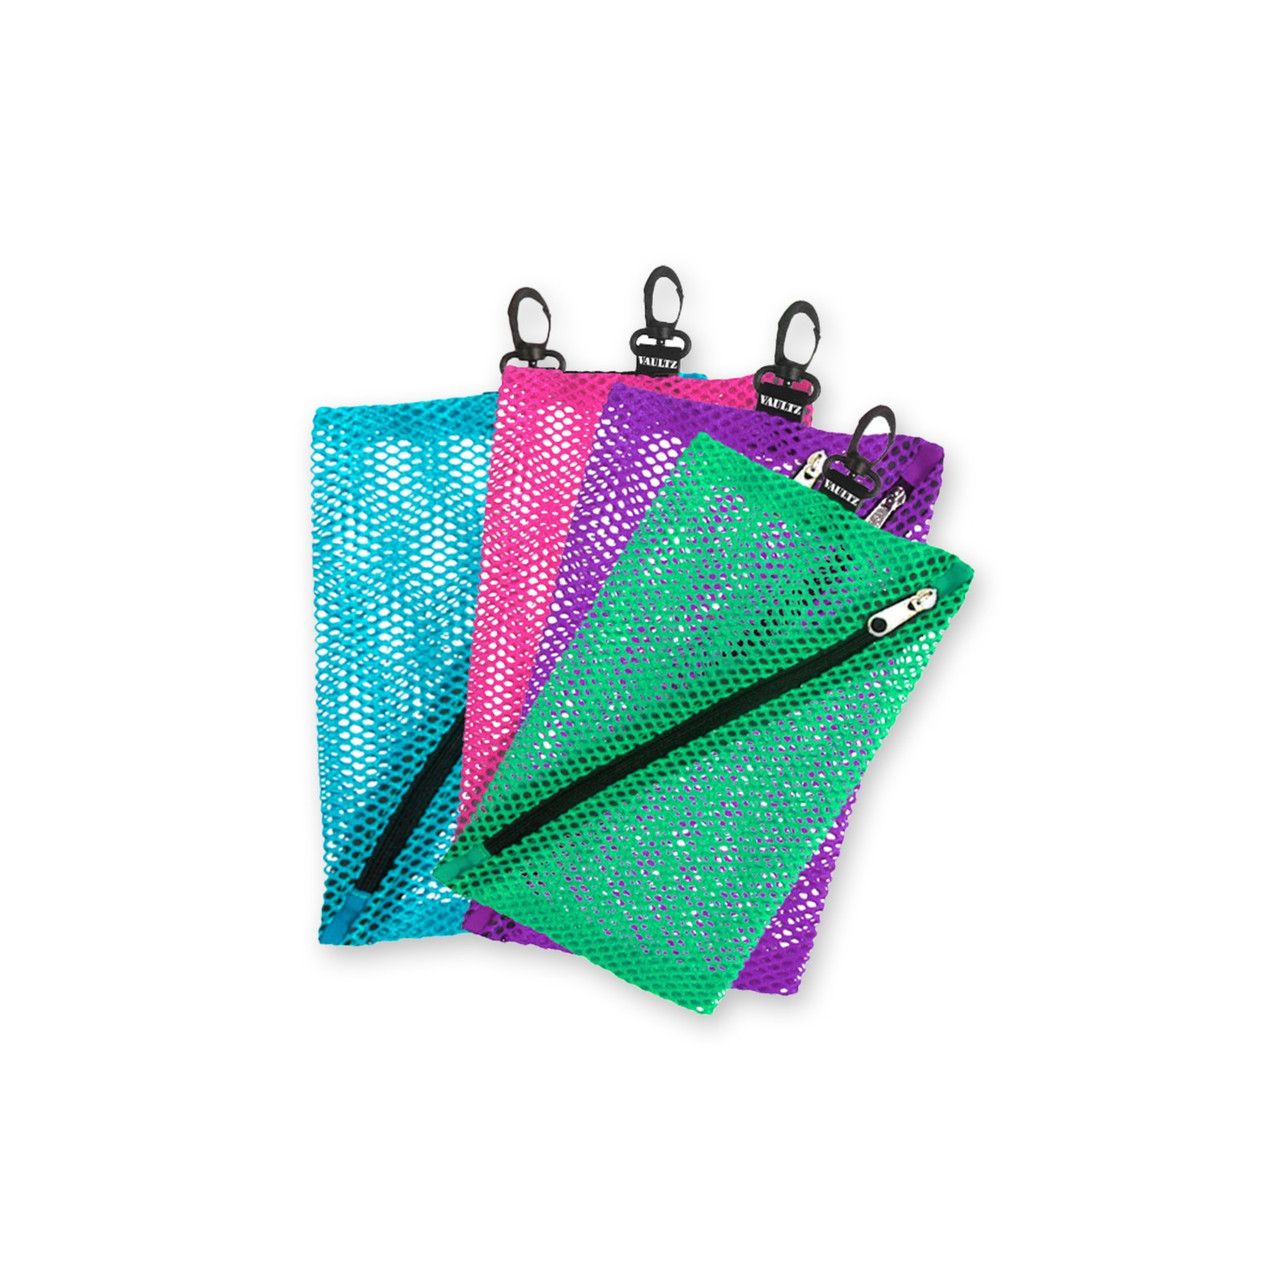 Vaultz Mesh Zipper Pouch Set - Pack of 4 - Mesh Pouch Zipper Bags for  Organizing, Storage, Travel, School, Cosmetics - Small, Medium & Large  Assorted